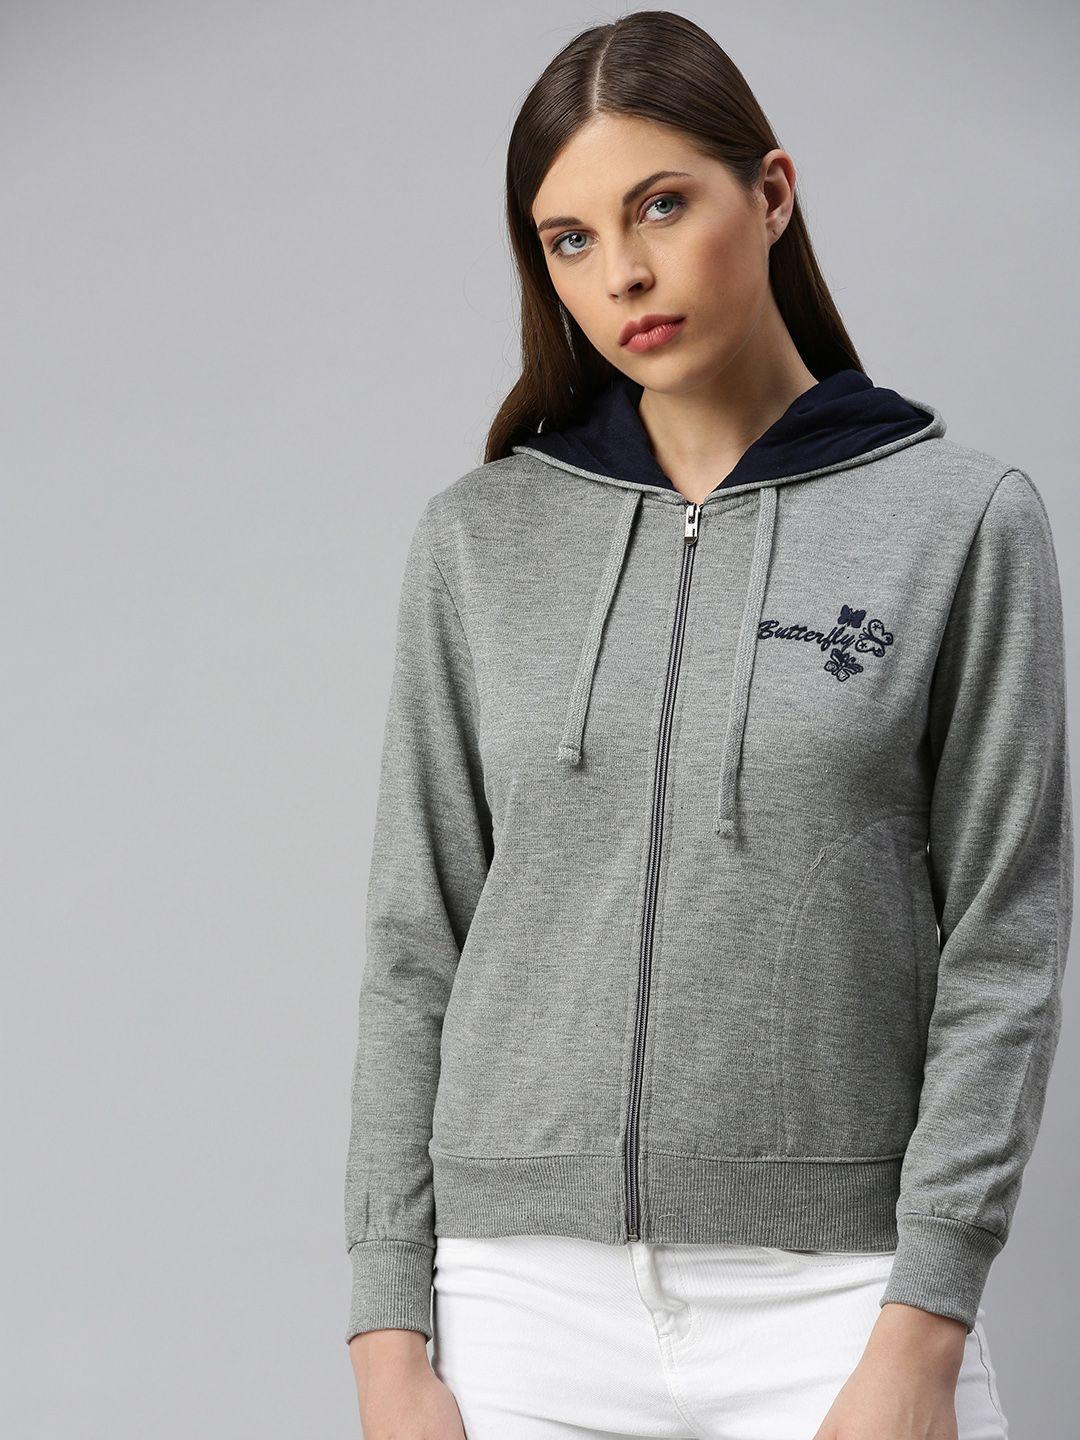 adbucks women grey solid hooded sweatshirt